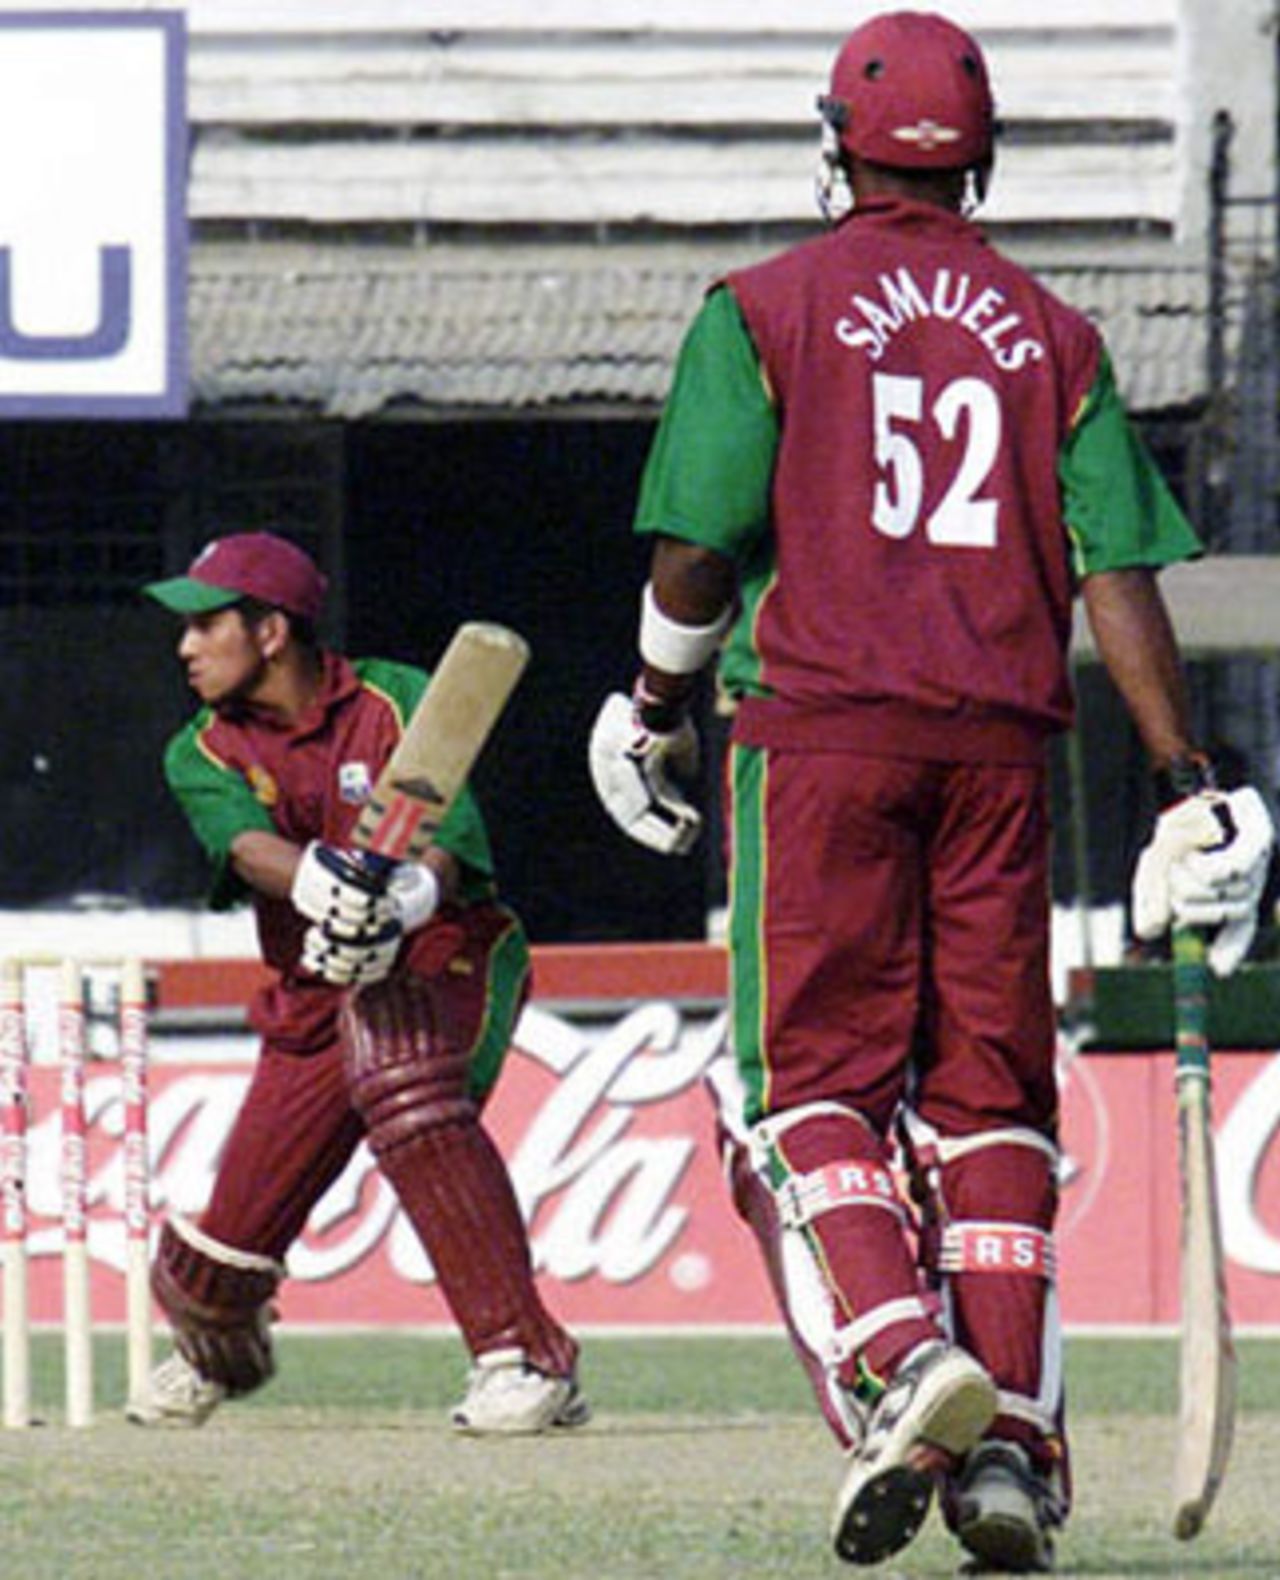 West Indies in Bangladesh, 2nd One Day International, 2 Dec 2002